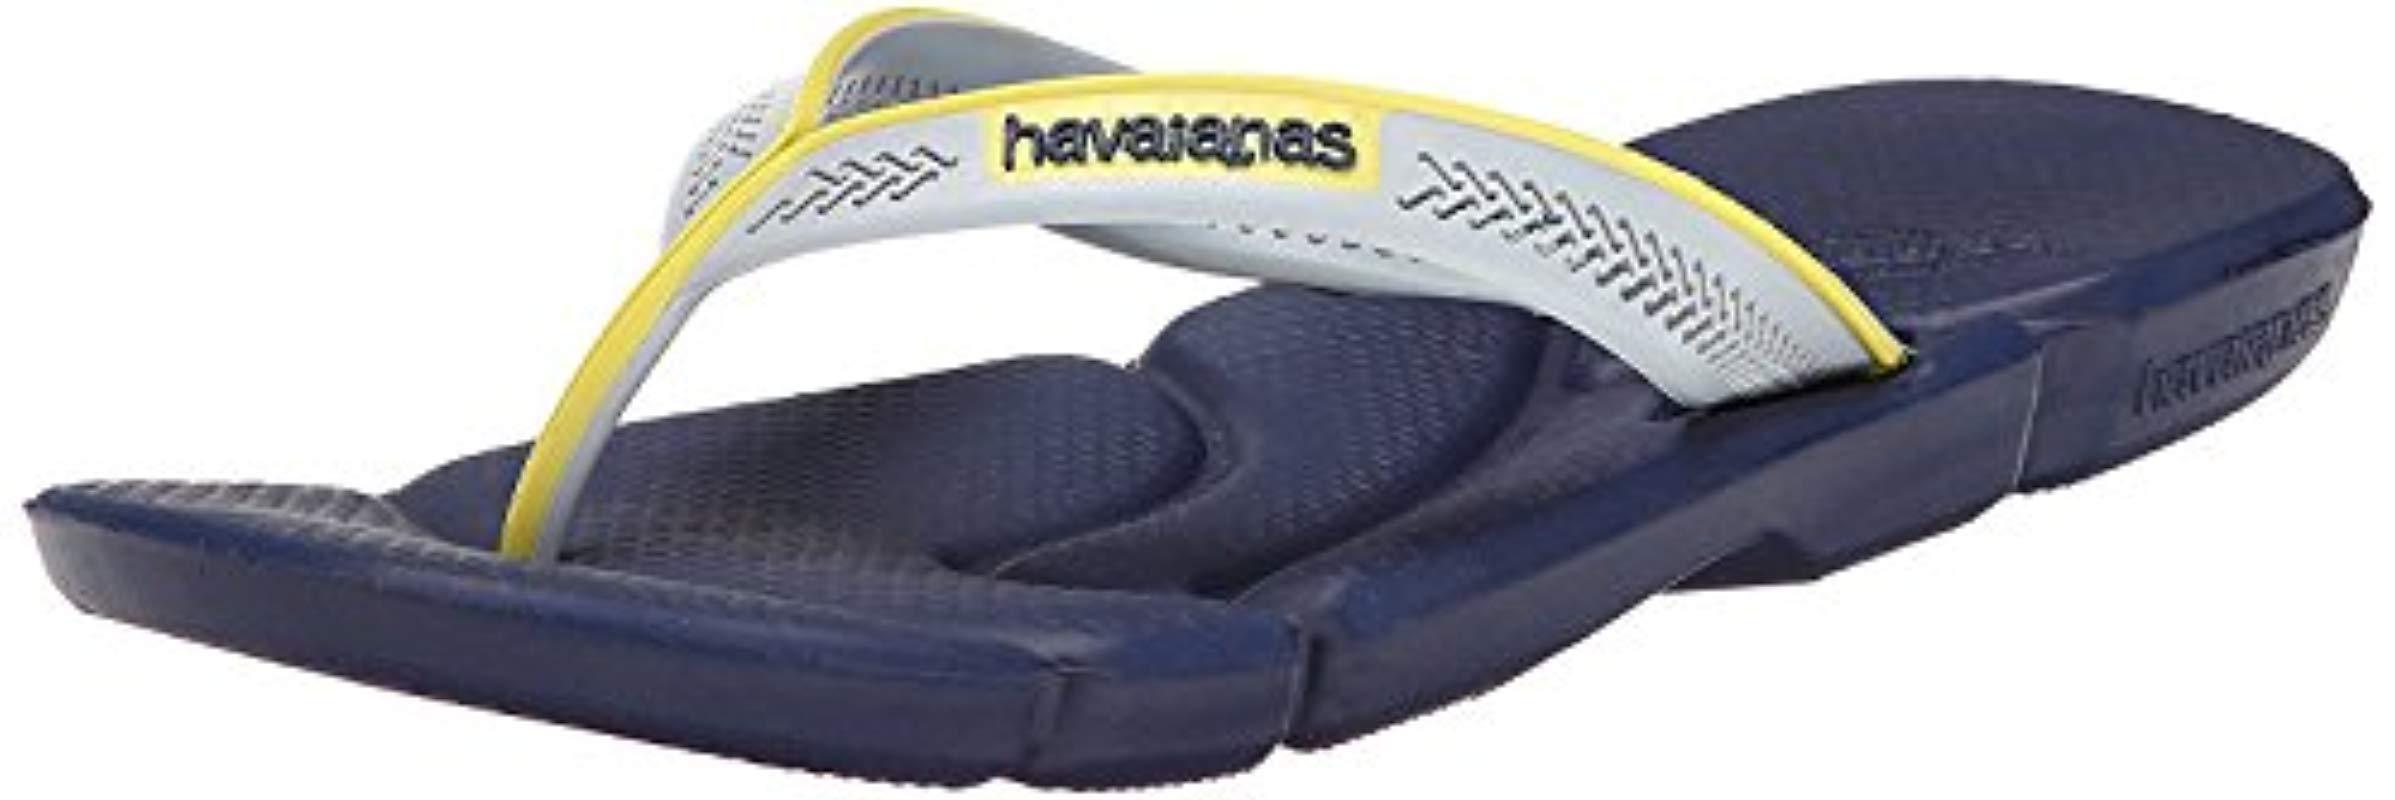 Lyst - Havaianas Power Flip Flop Sandals, Comfort Designed Footbed ...